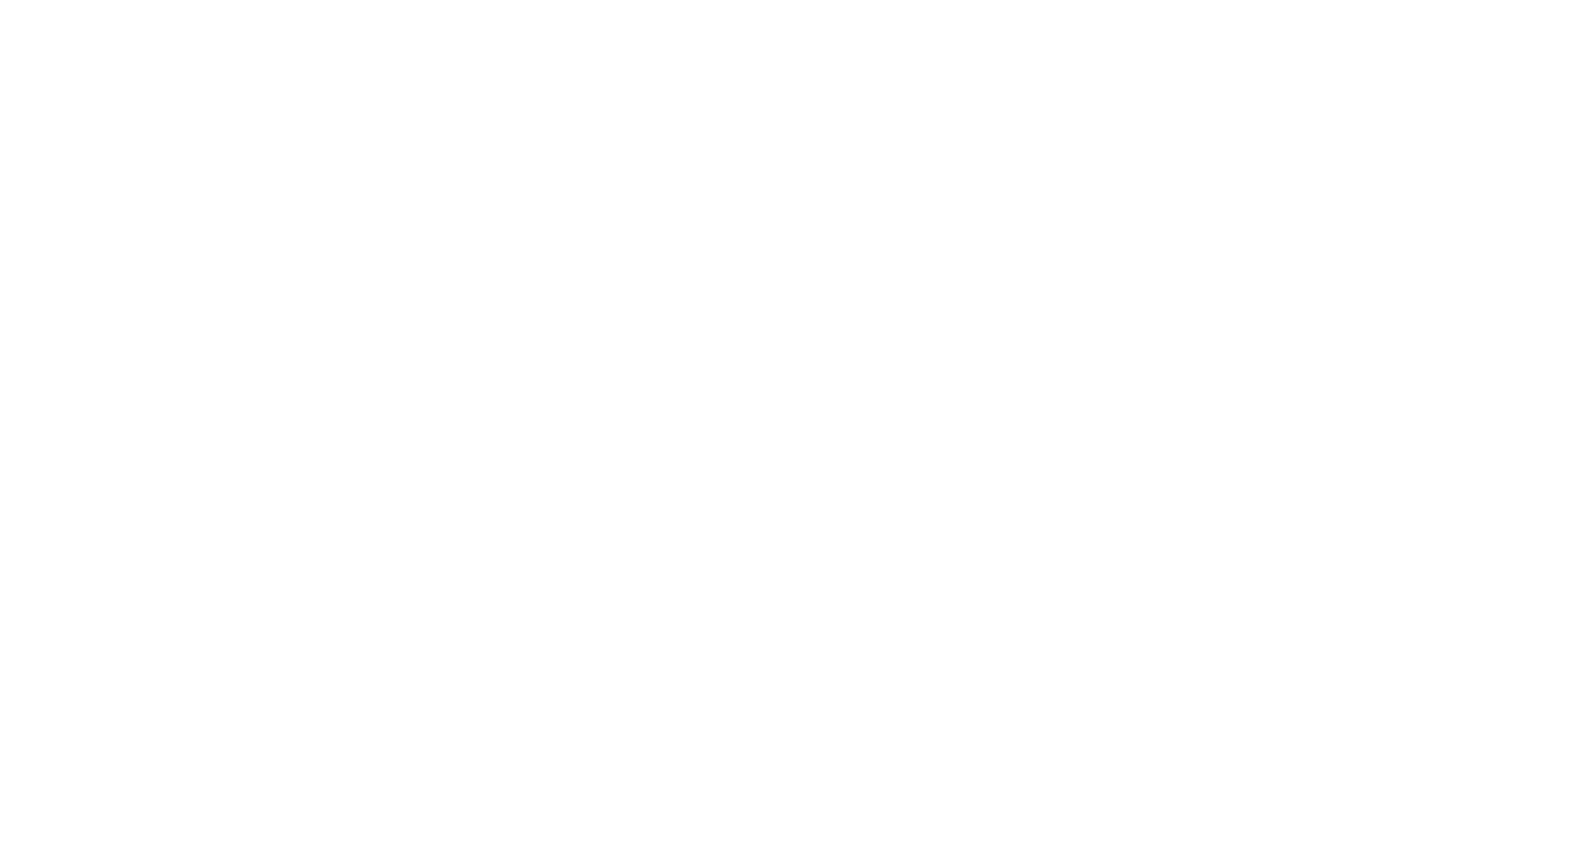 Mineral Resources logo large for dark backgrounds (transparent PNG)